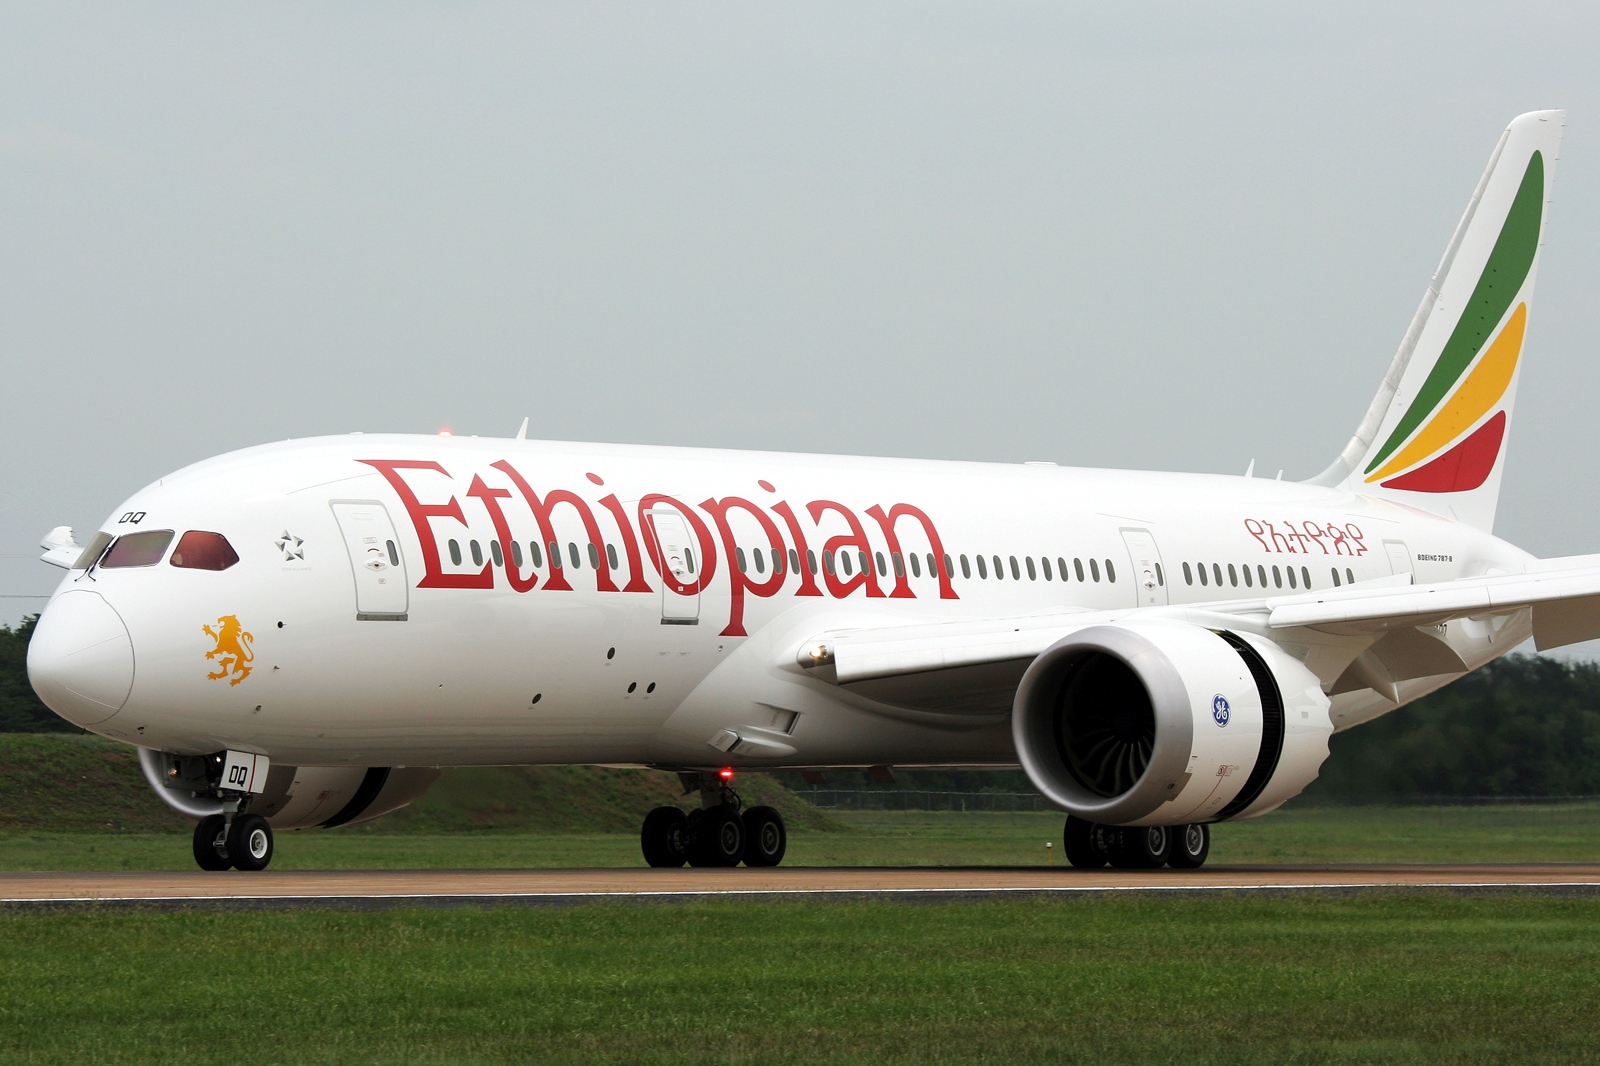 THE ETHIOPIAN AIRLINES